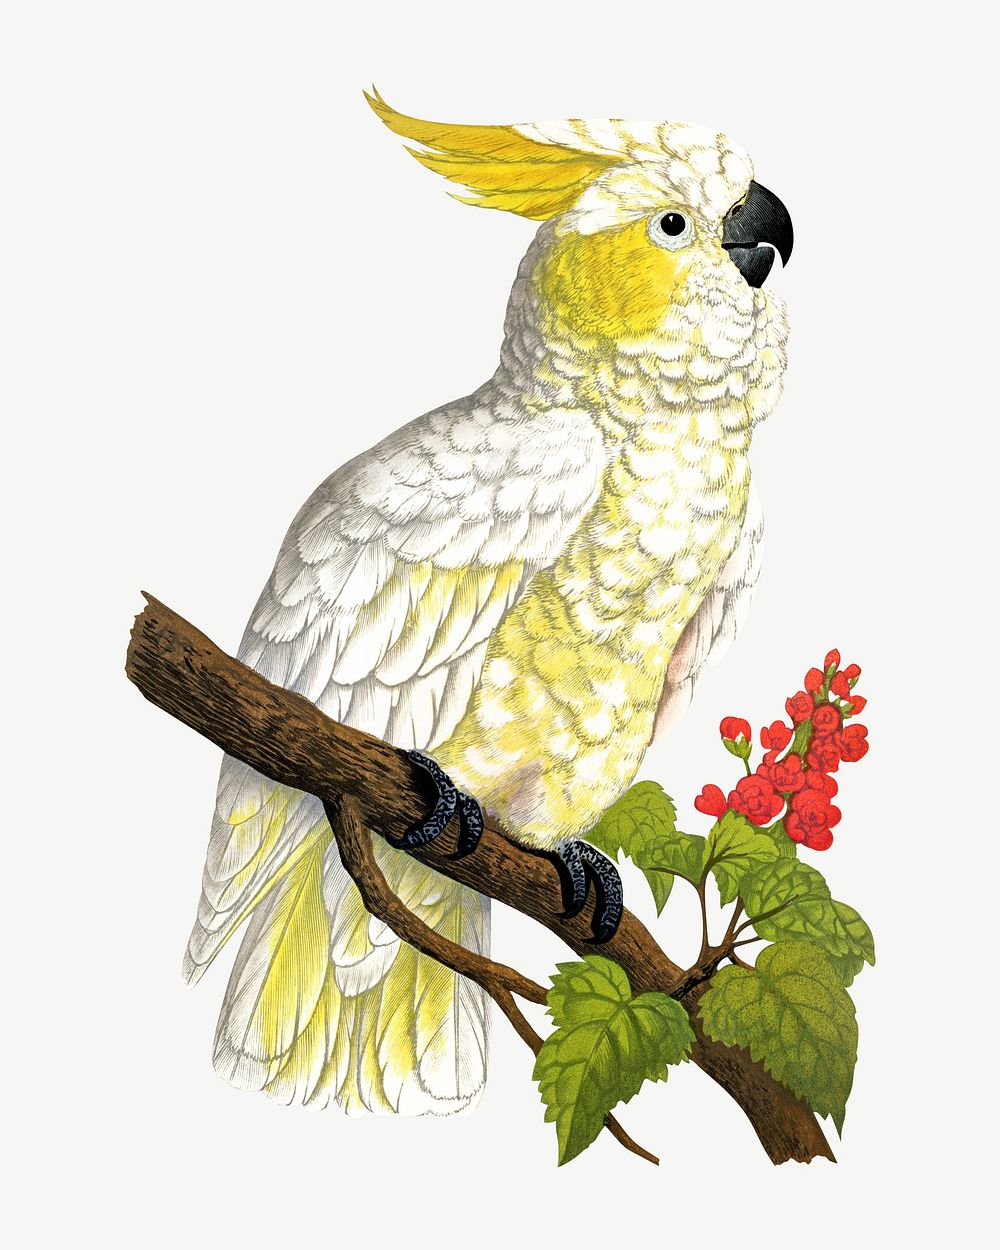 Lesser lemon-crested cockatoo, vintage bird illustration psd. Remixed by rawpixel.